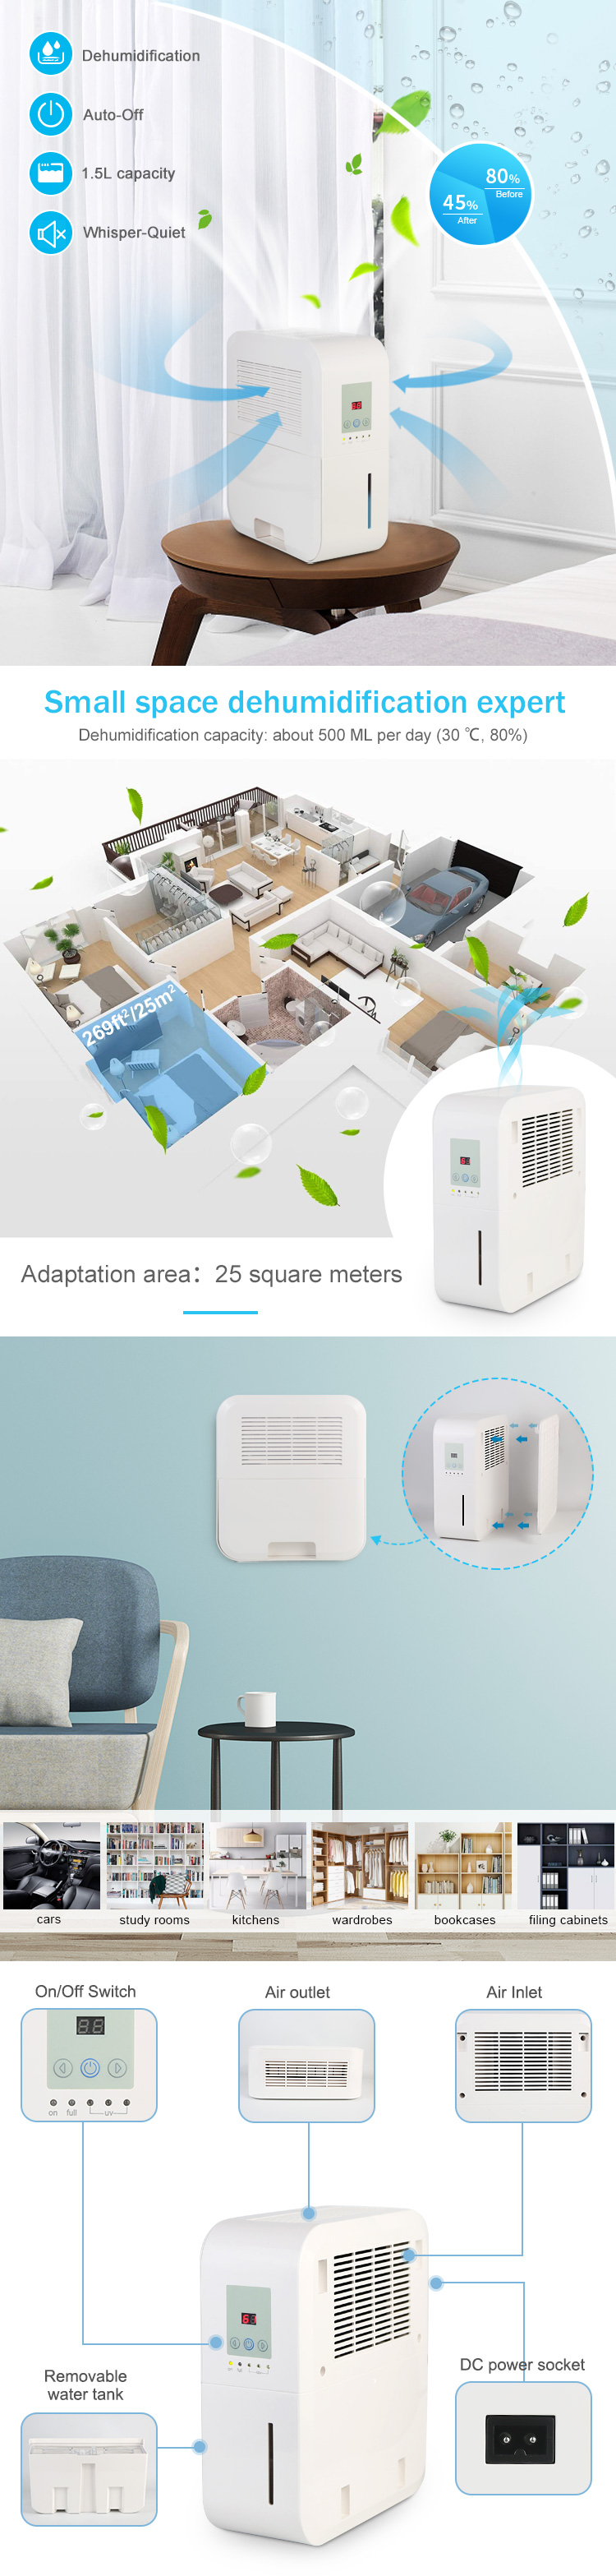 Small Digital Cool Air Dehumidifier with Humidistat